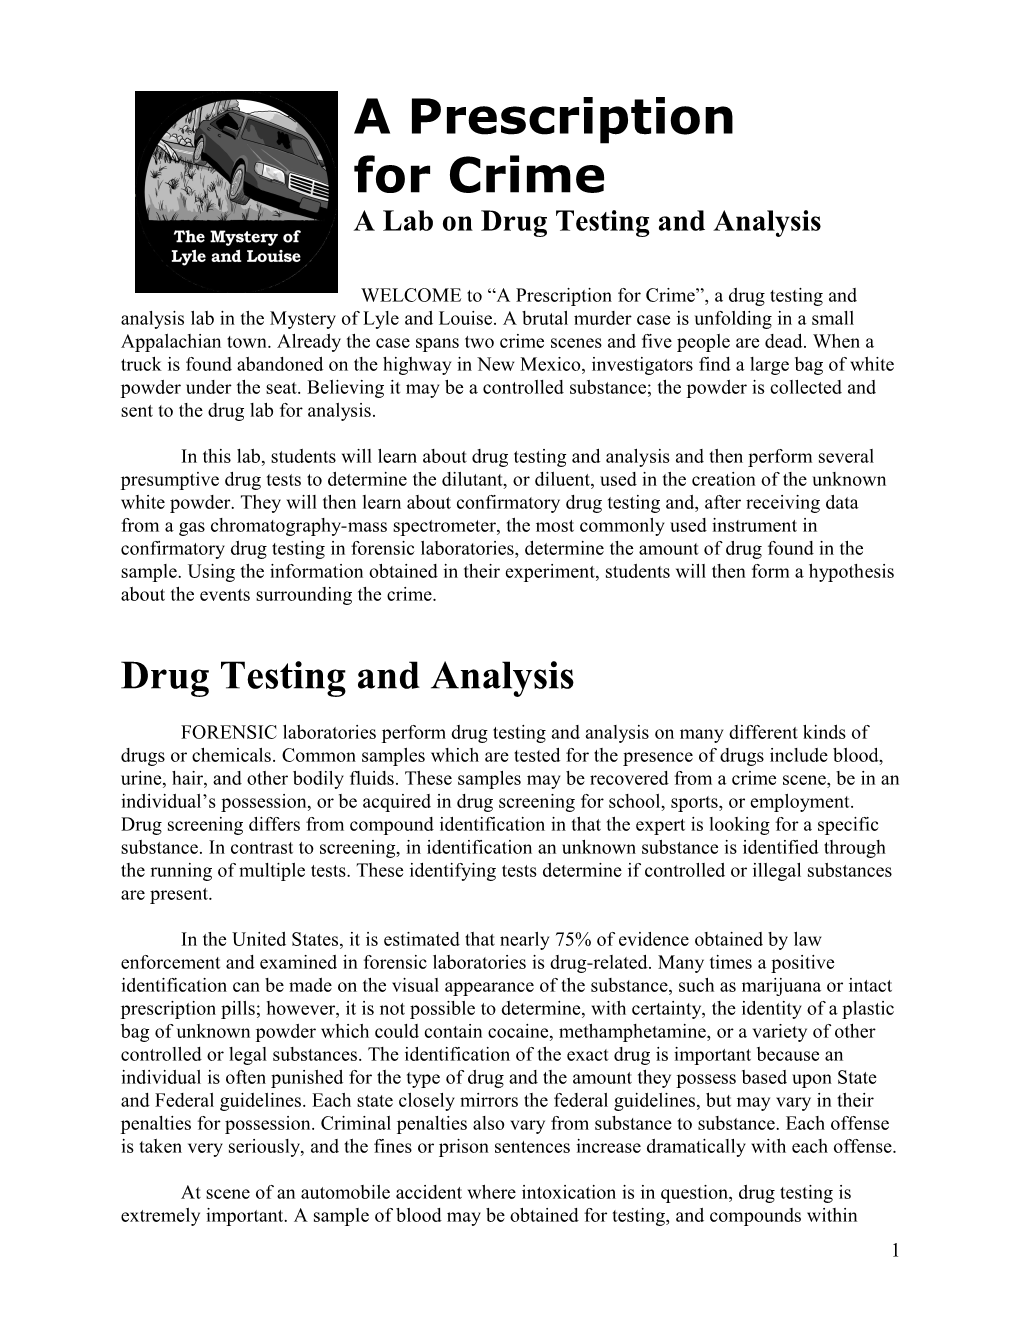 A Lab on Drug Testing and Analysis